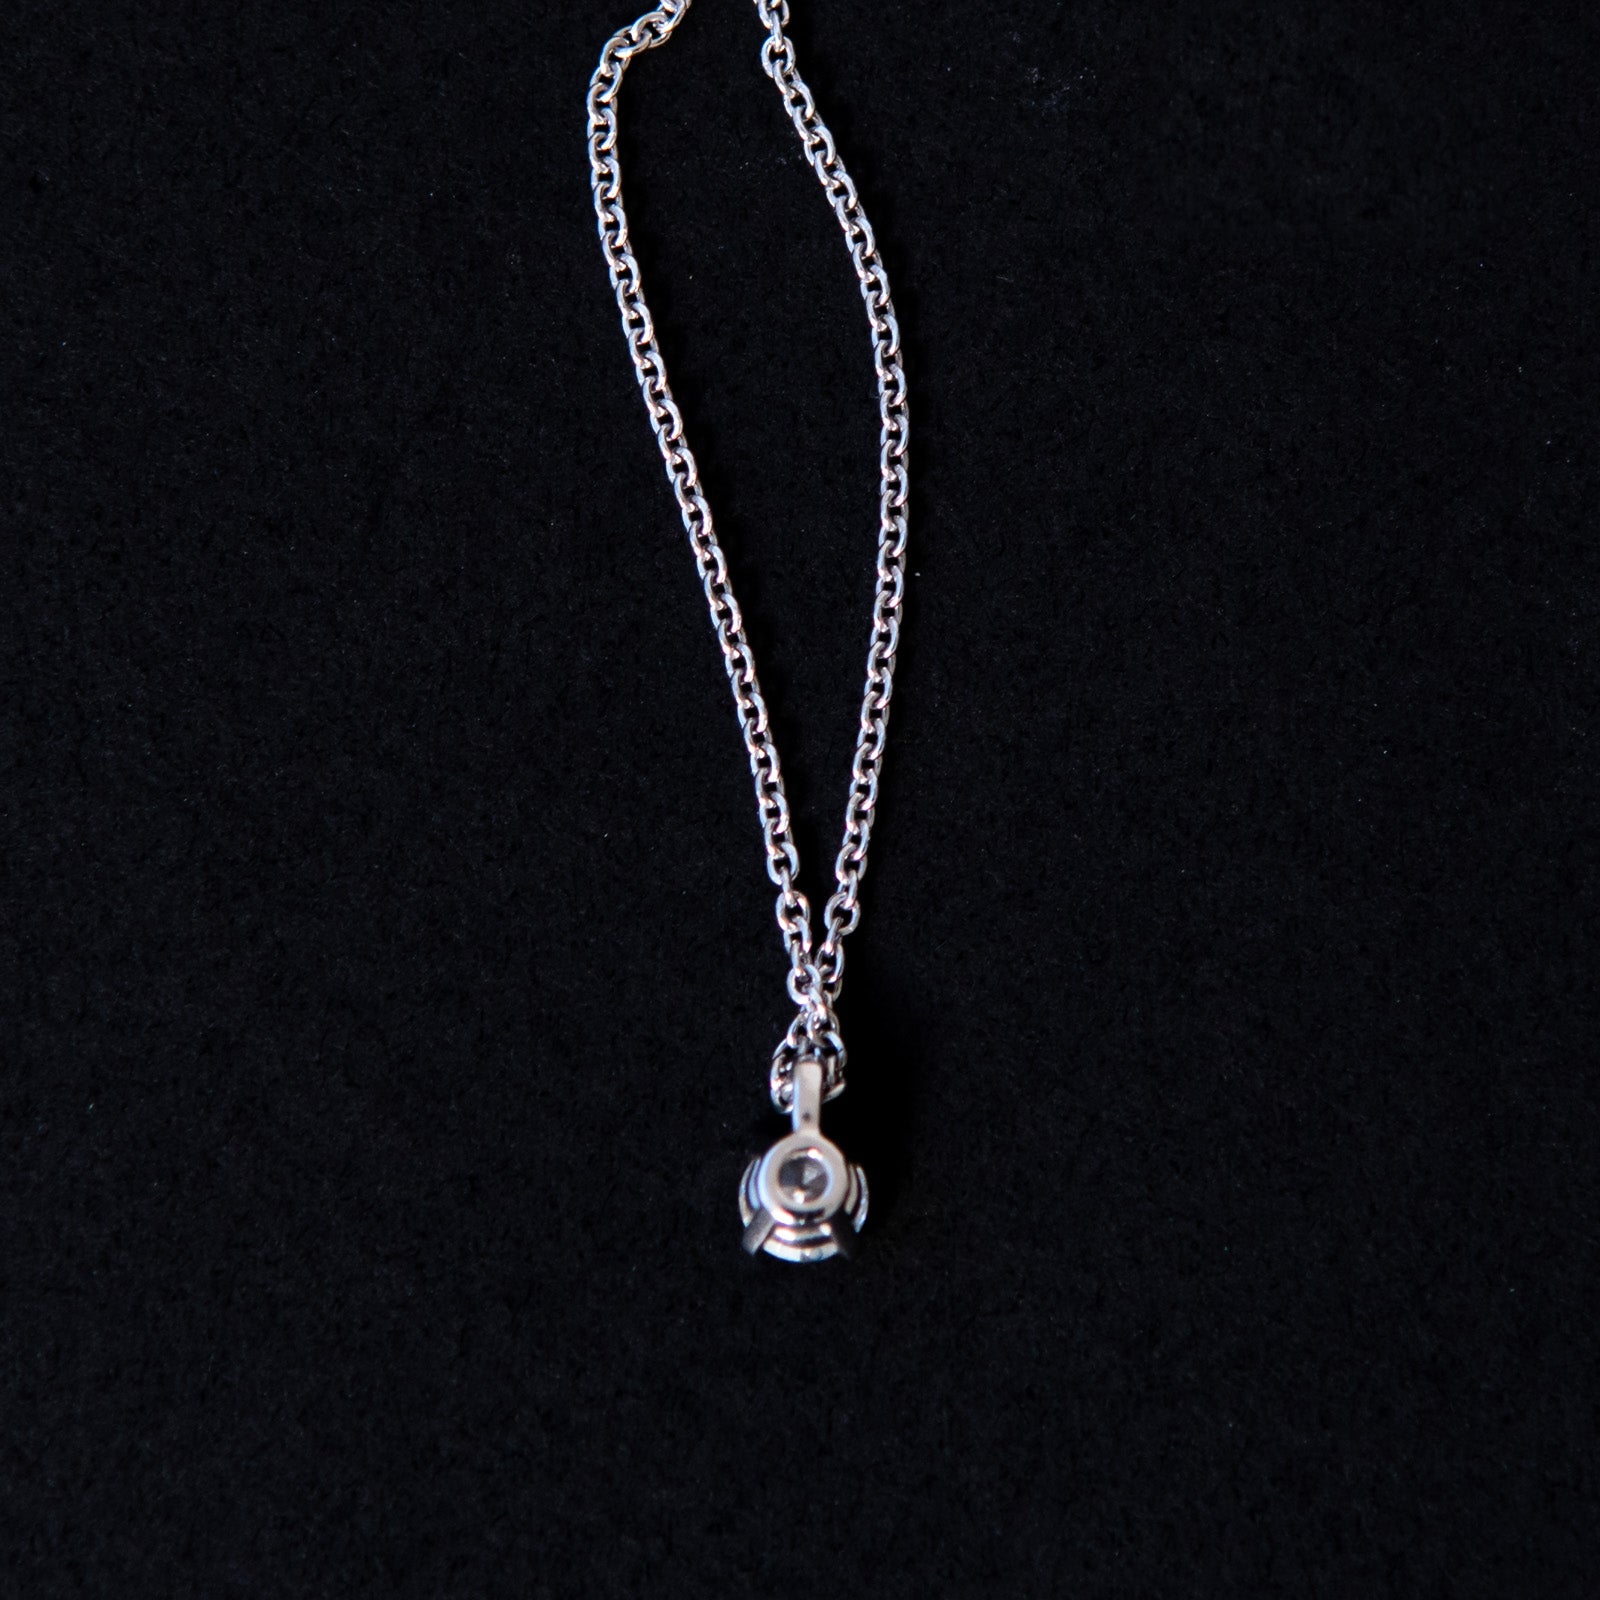 De Beers Classic Round Diamond Pendant Necklace - Image 5 of 6